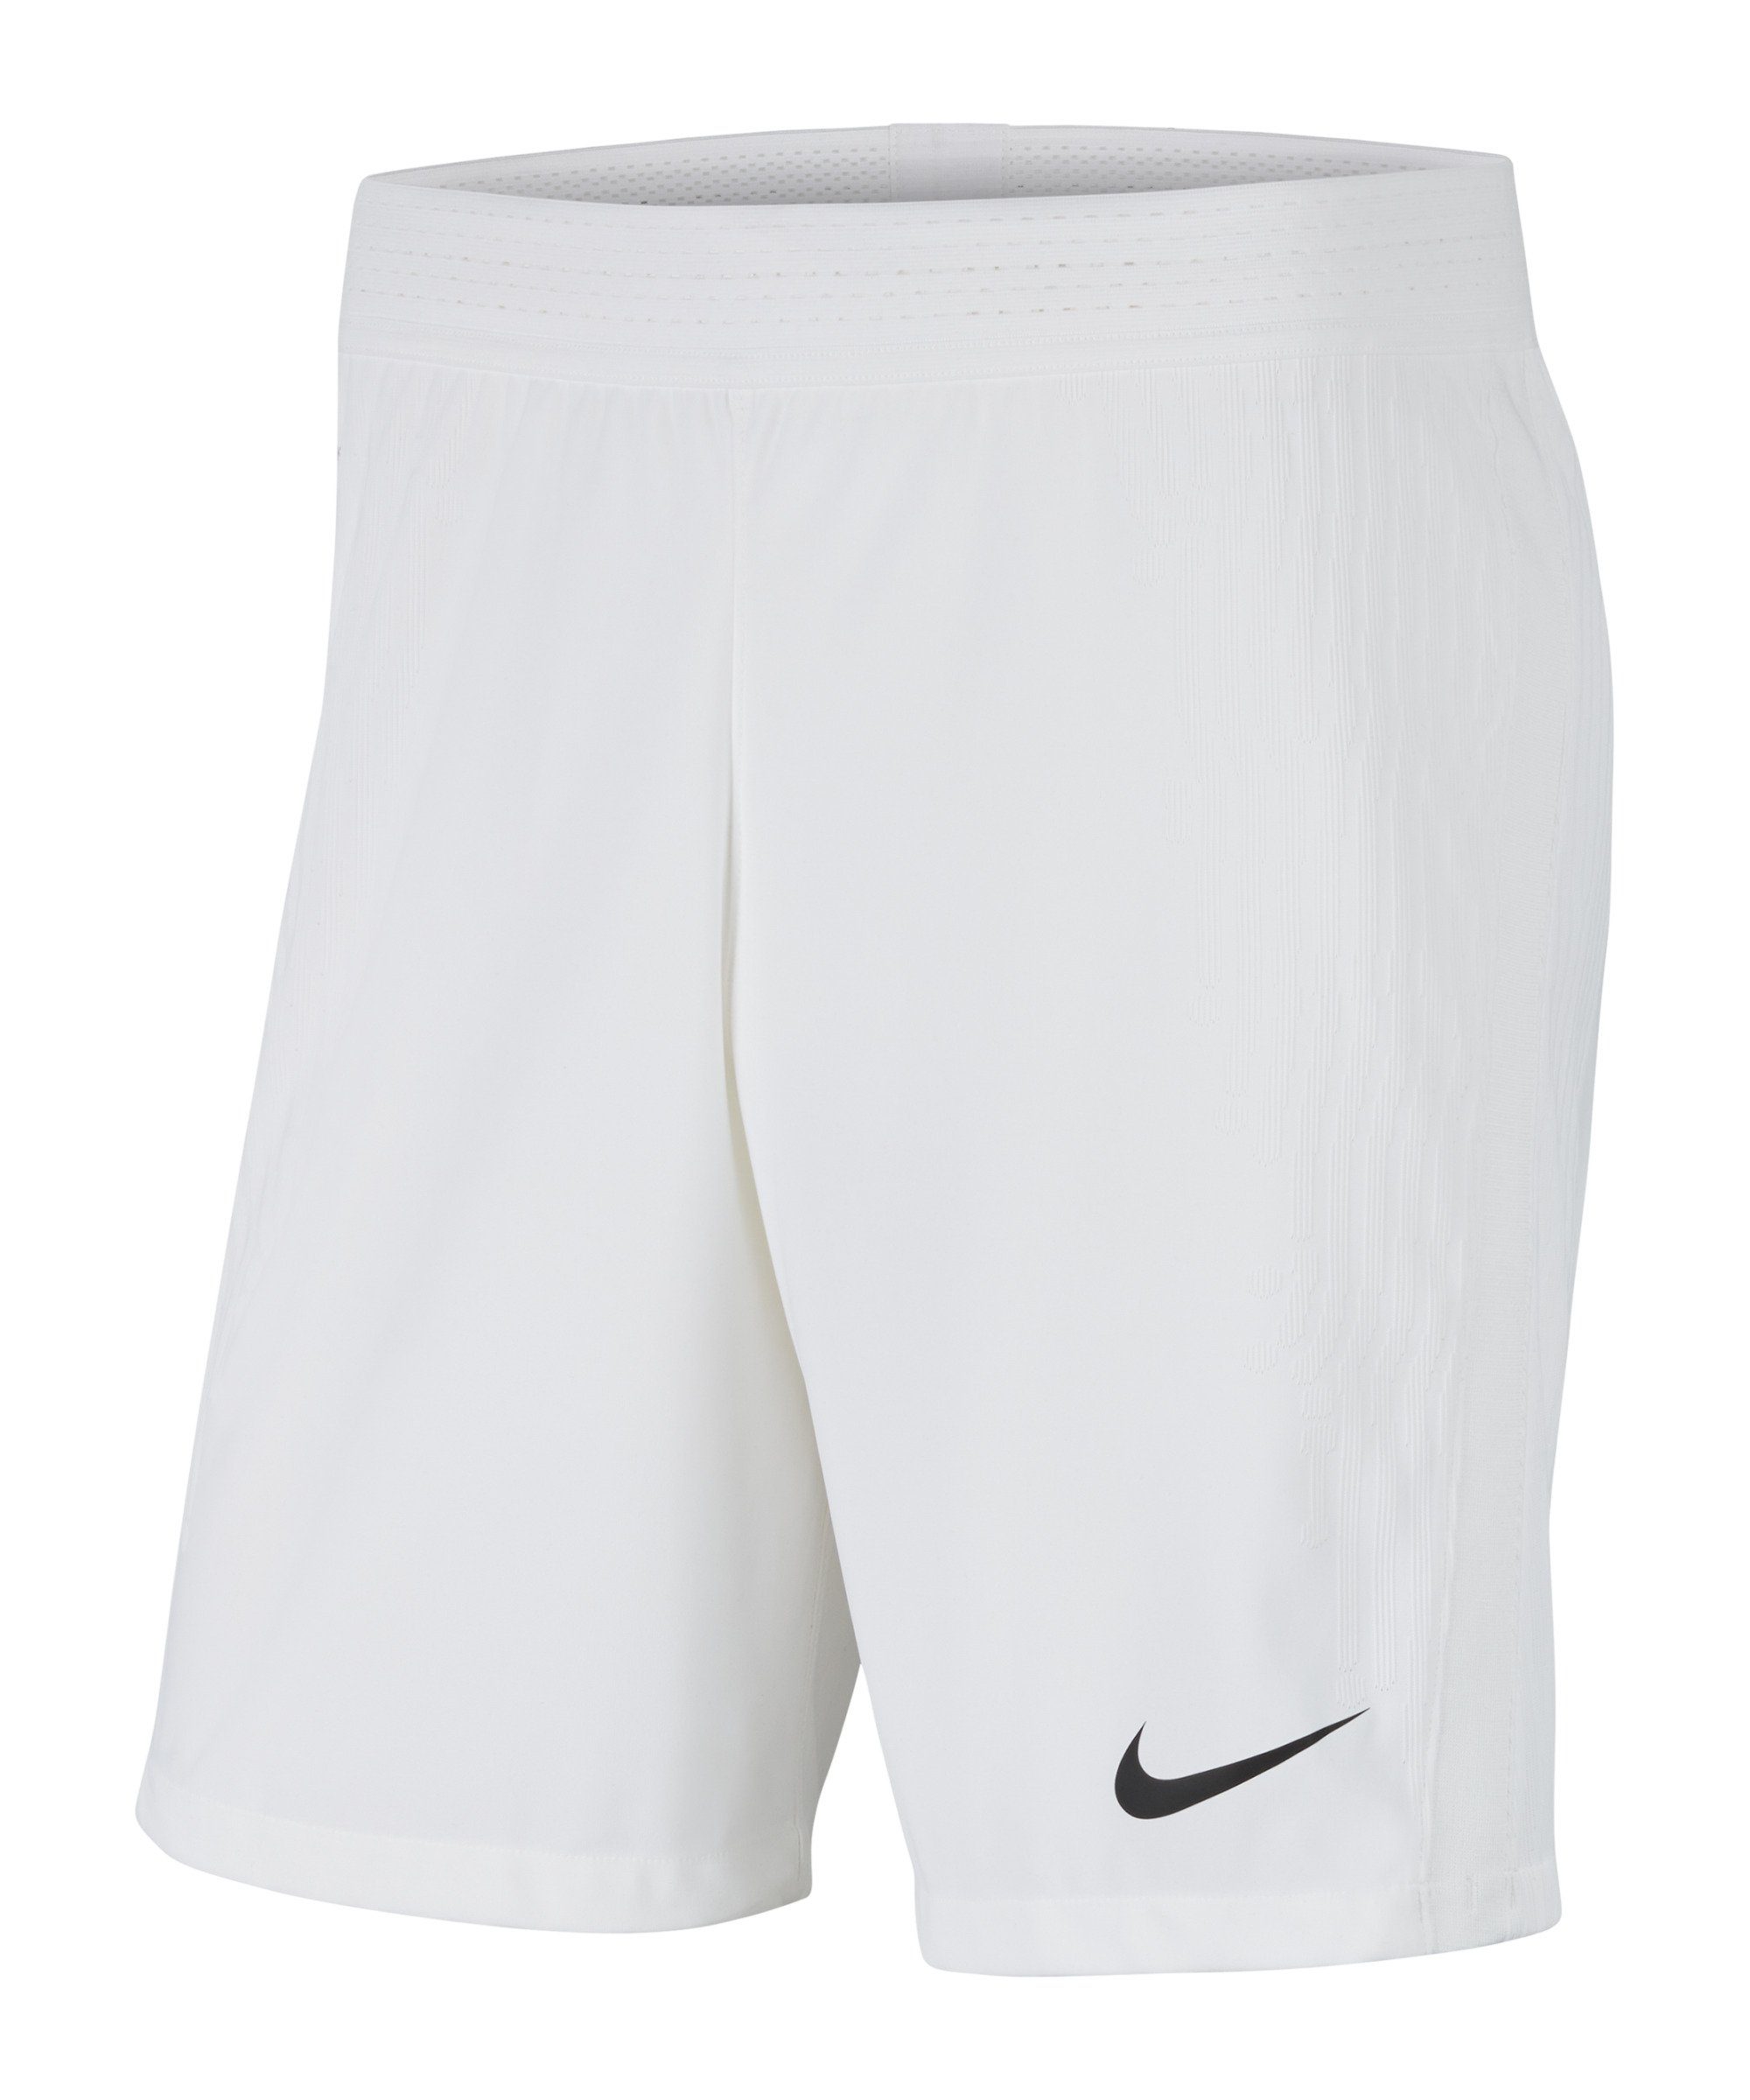 Nike Sporthose Vapor Knit III weissschwarz Short